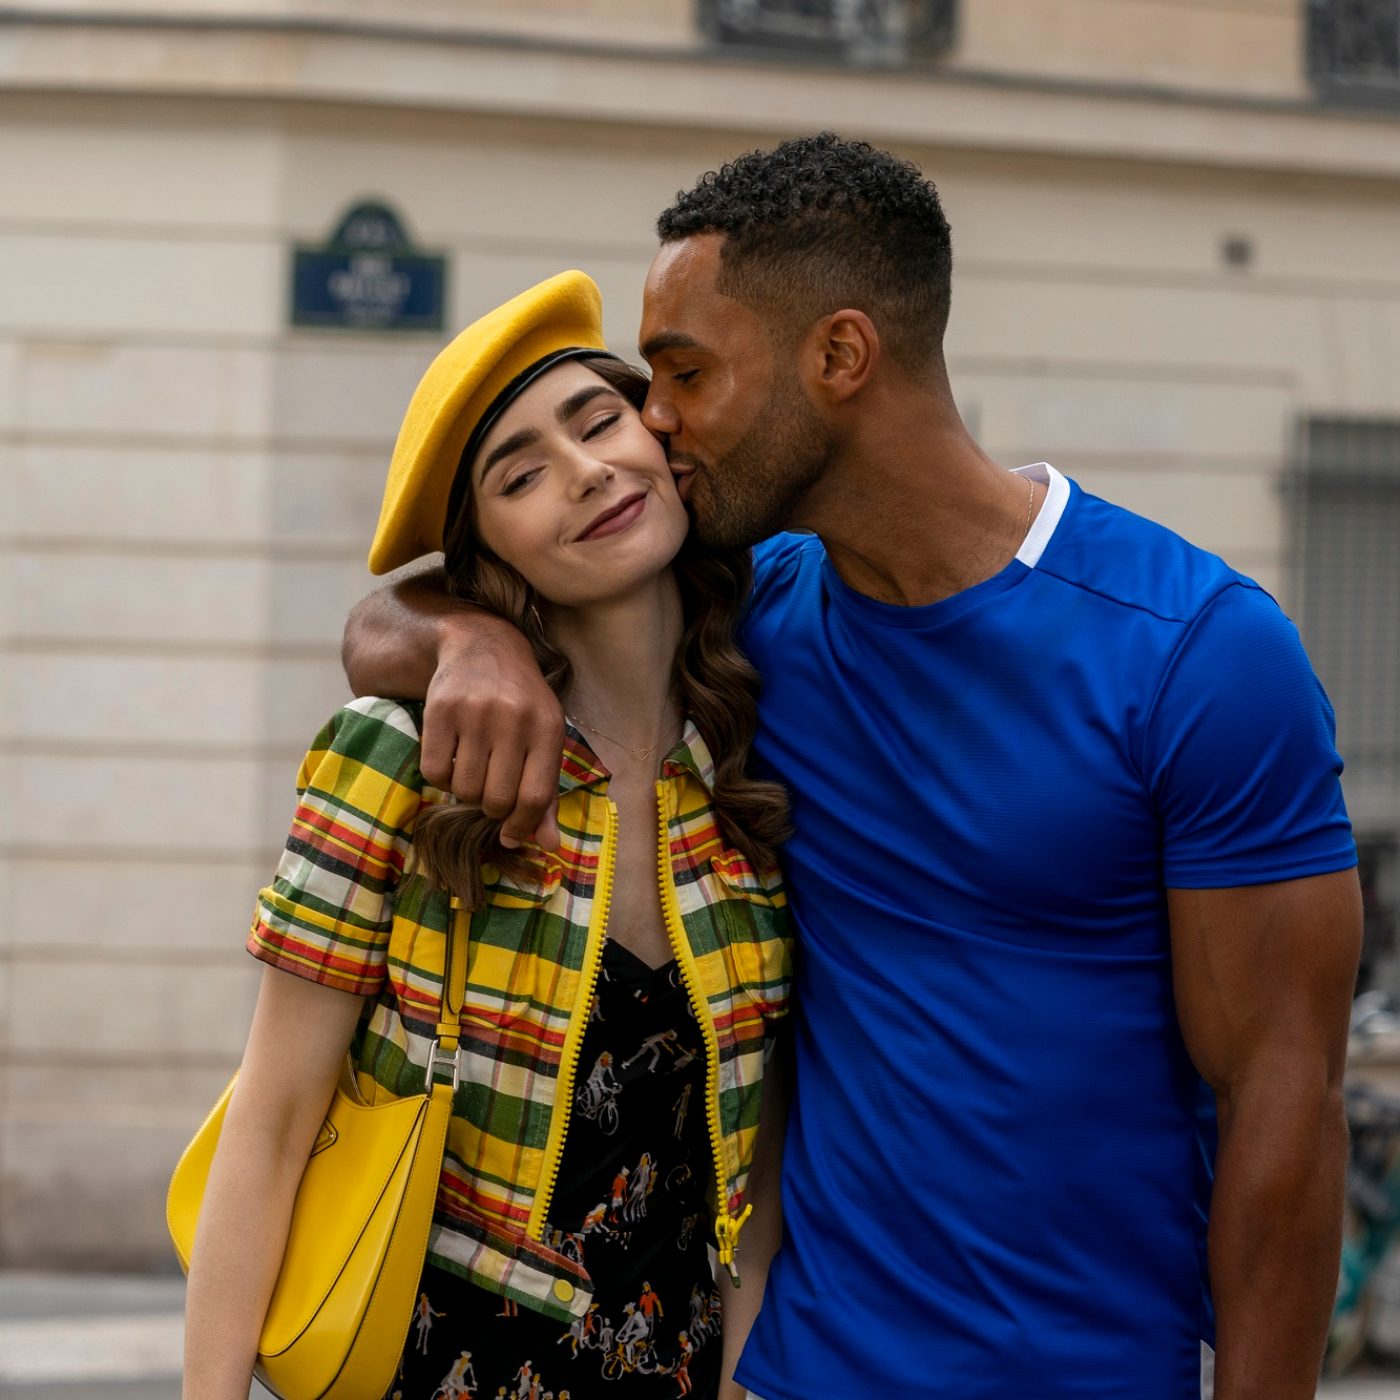 Emily in Paris' Season 2 Premiere Viewership Was 77% Female